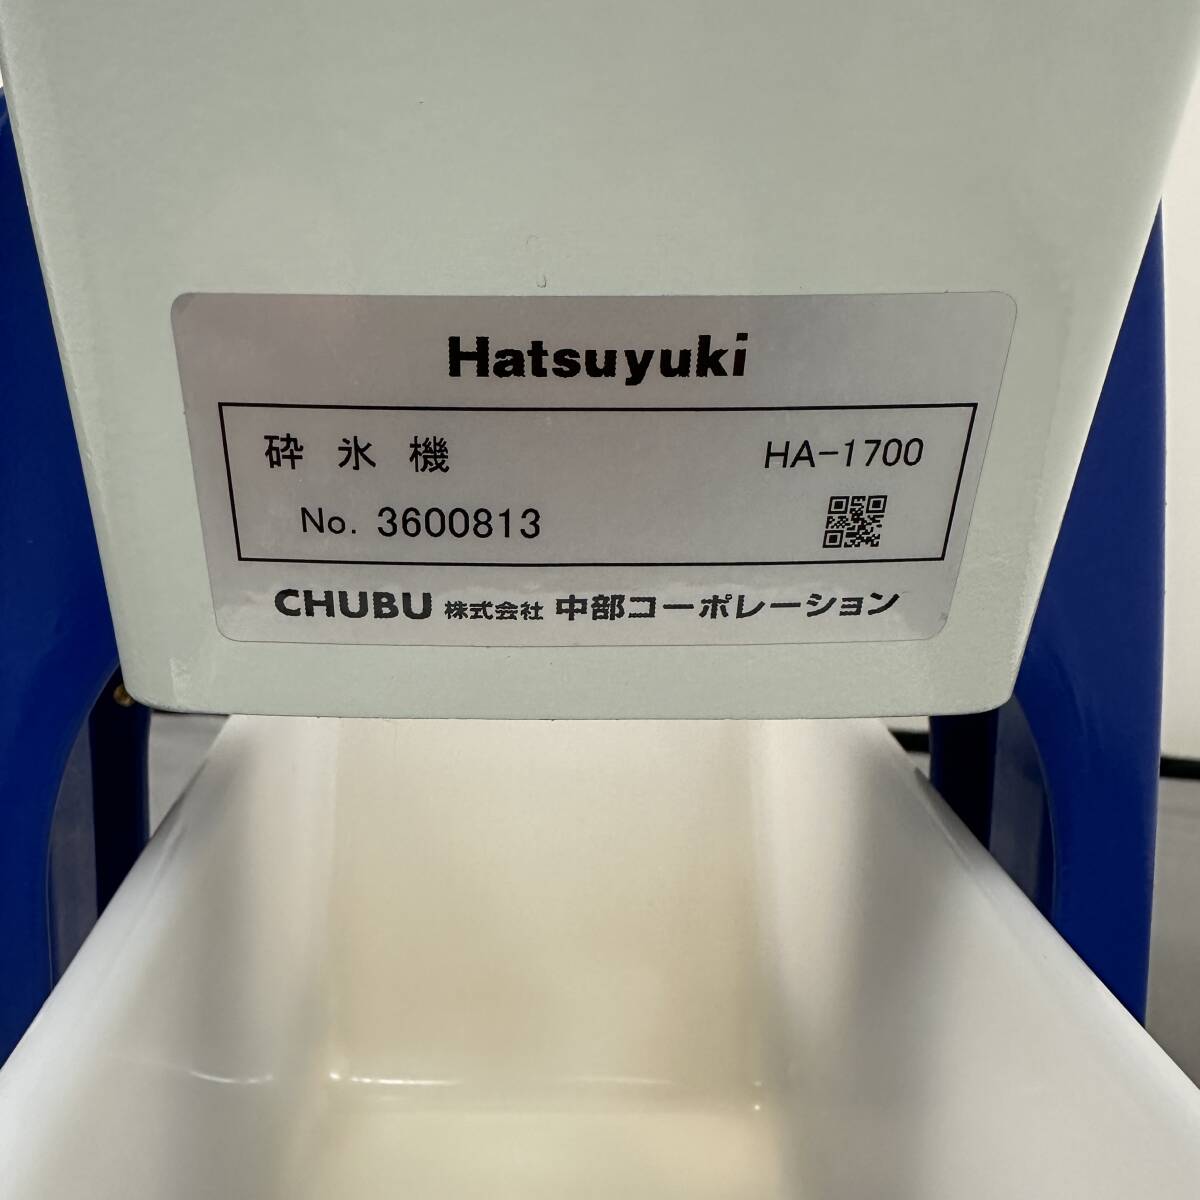 **T0454 CHUBU Chuubu корпорация . лед машина HATSUYUKI HA-1700 машина для колки льда дробилка льда Showa Retro 